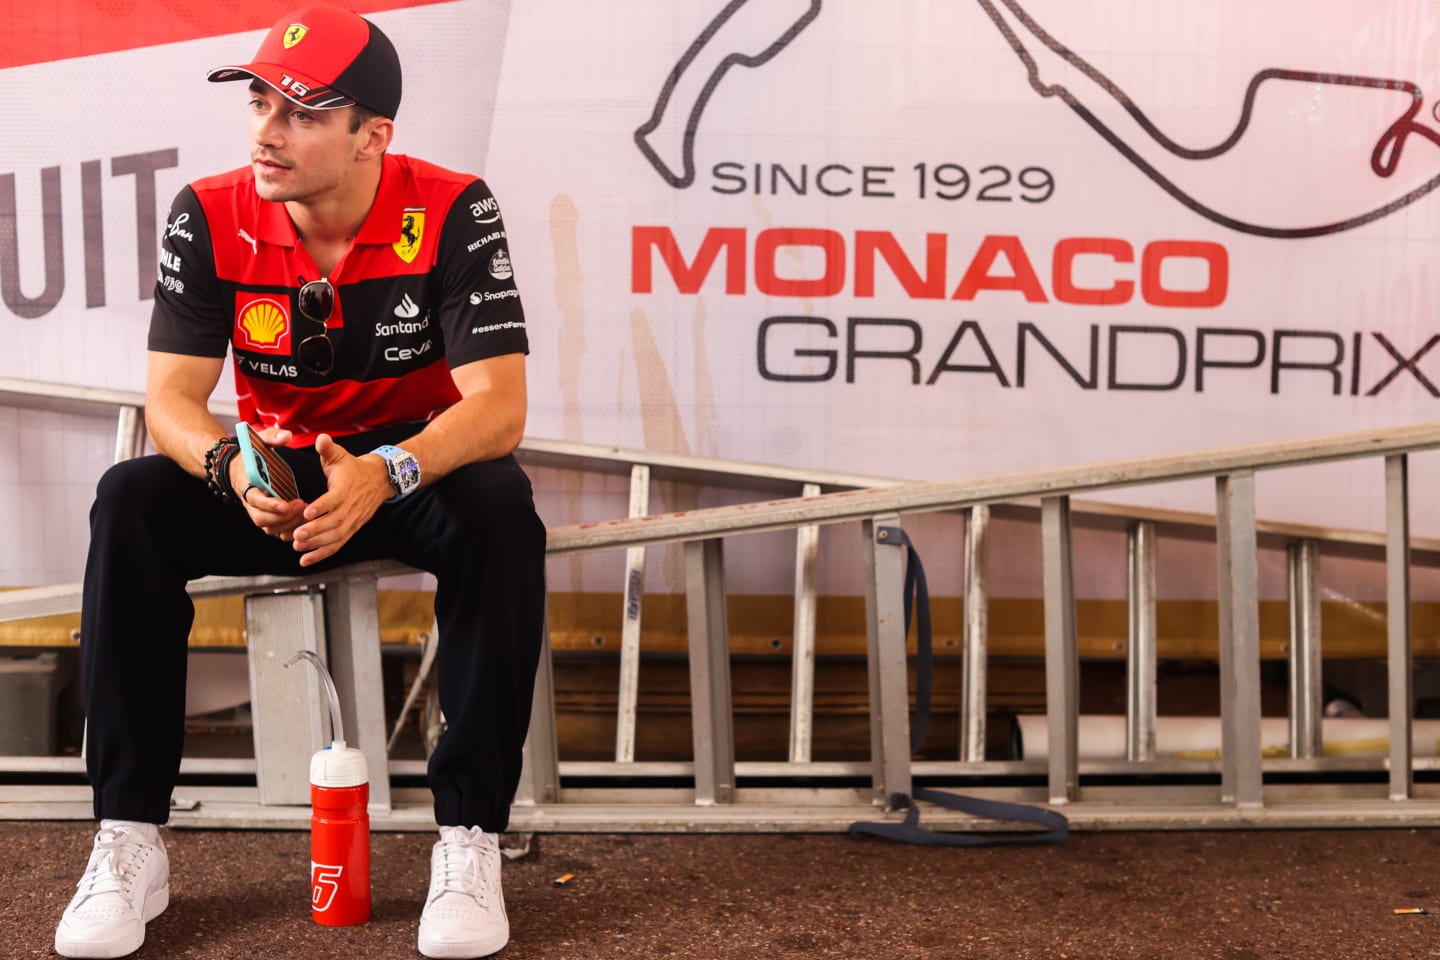 MONTE-CARLO, MONACO - MAY 29: Charles Leclerc of Ferrari and Monaco before the drivers parade